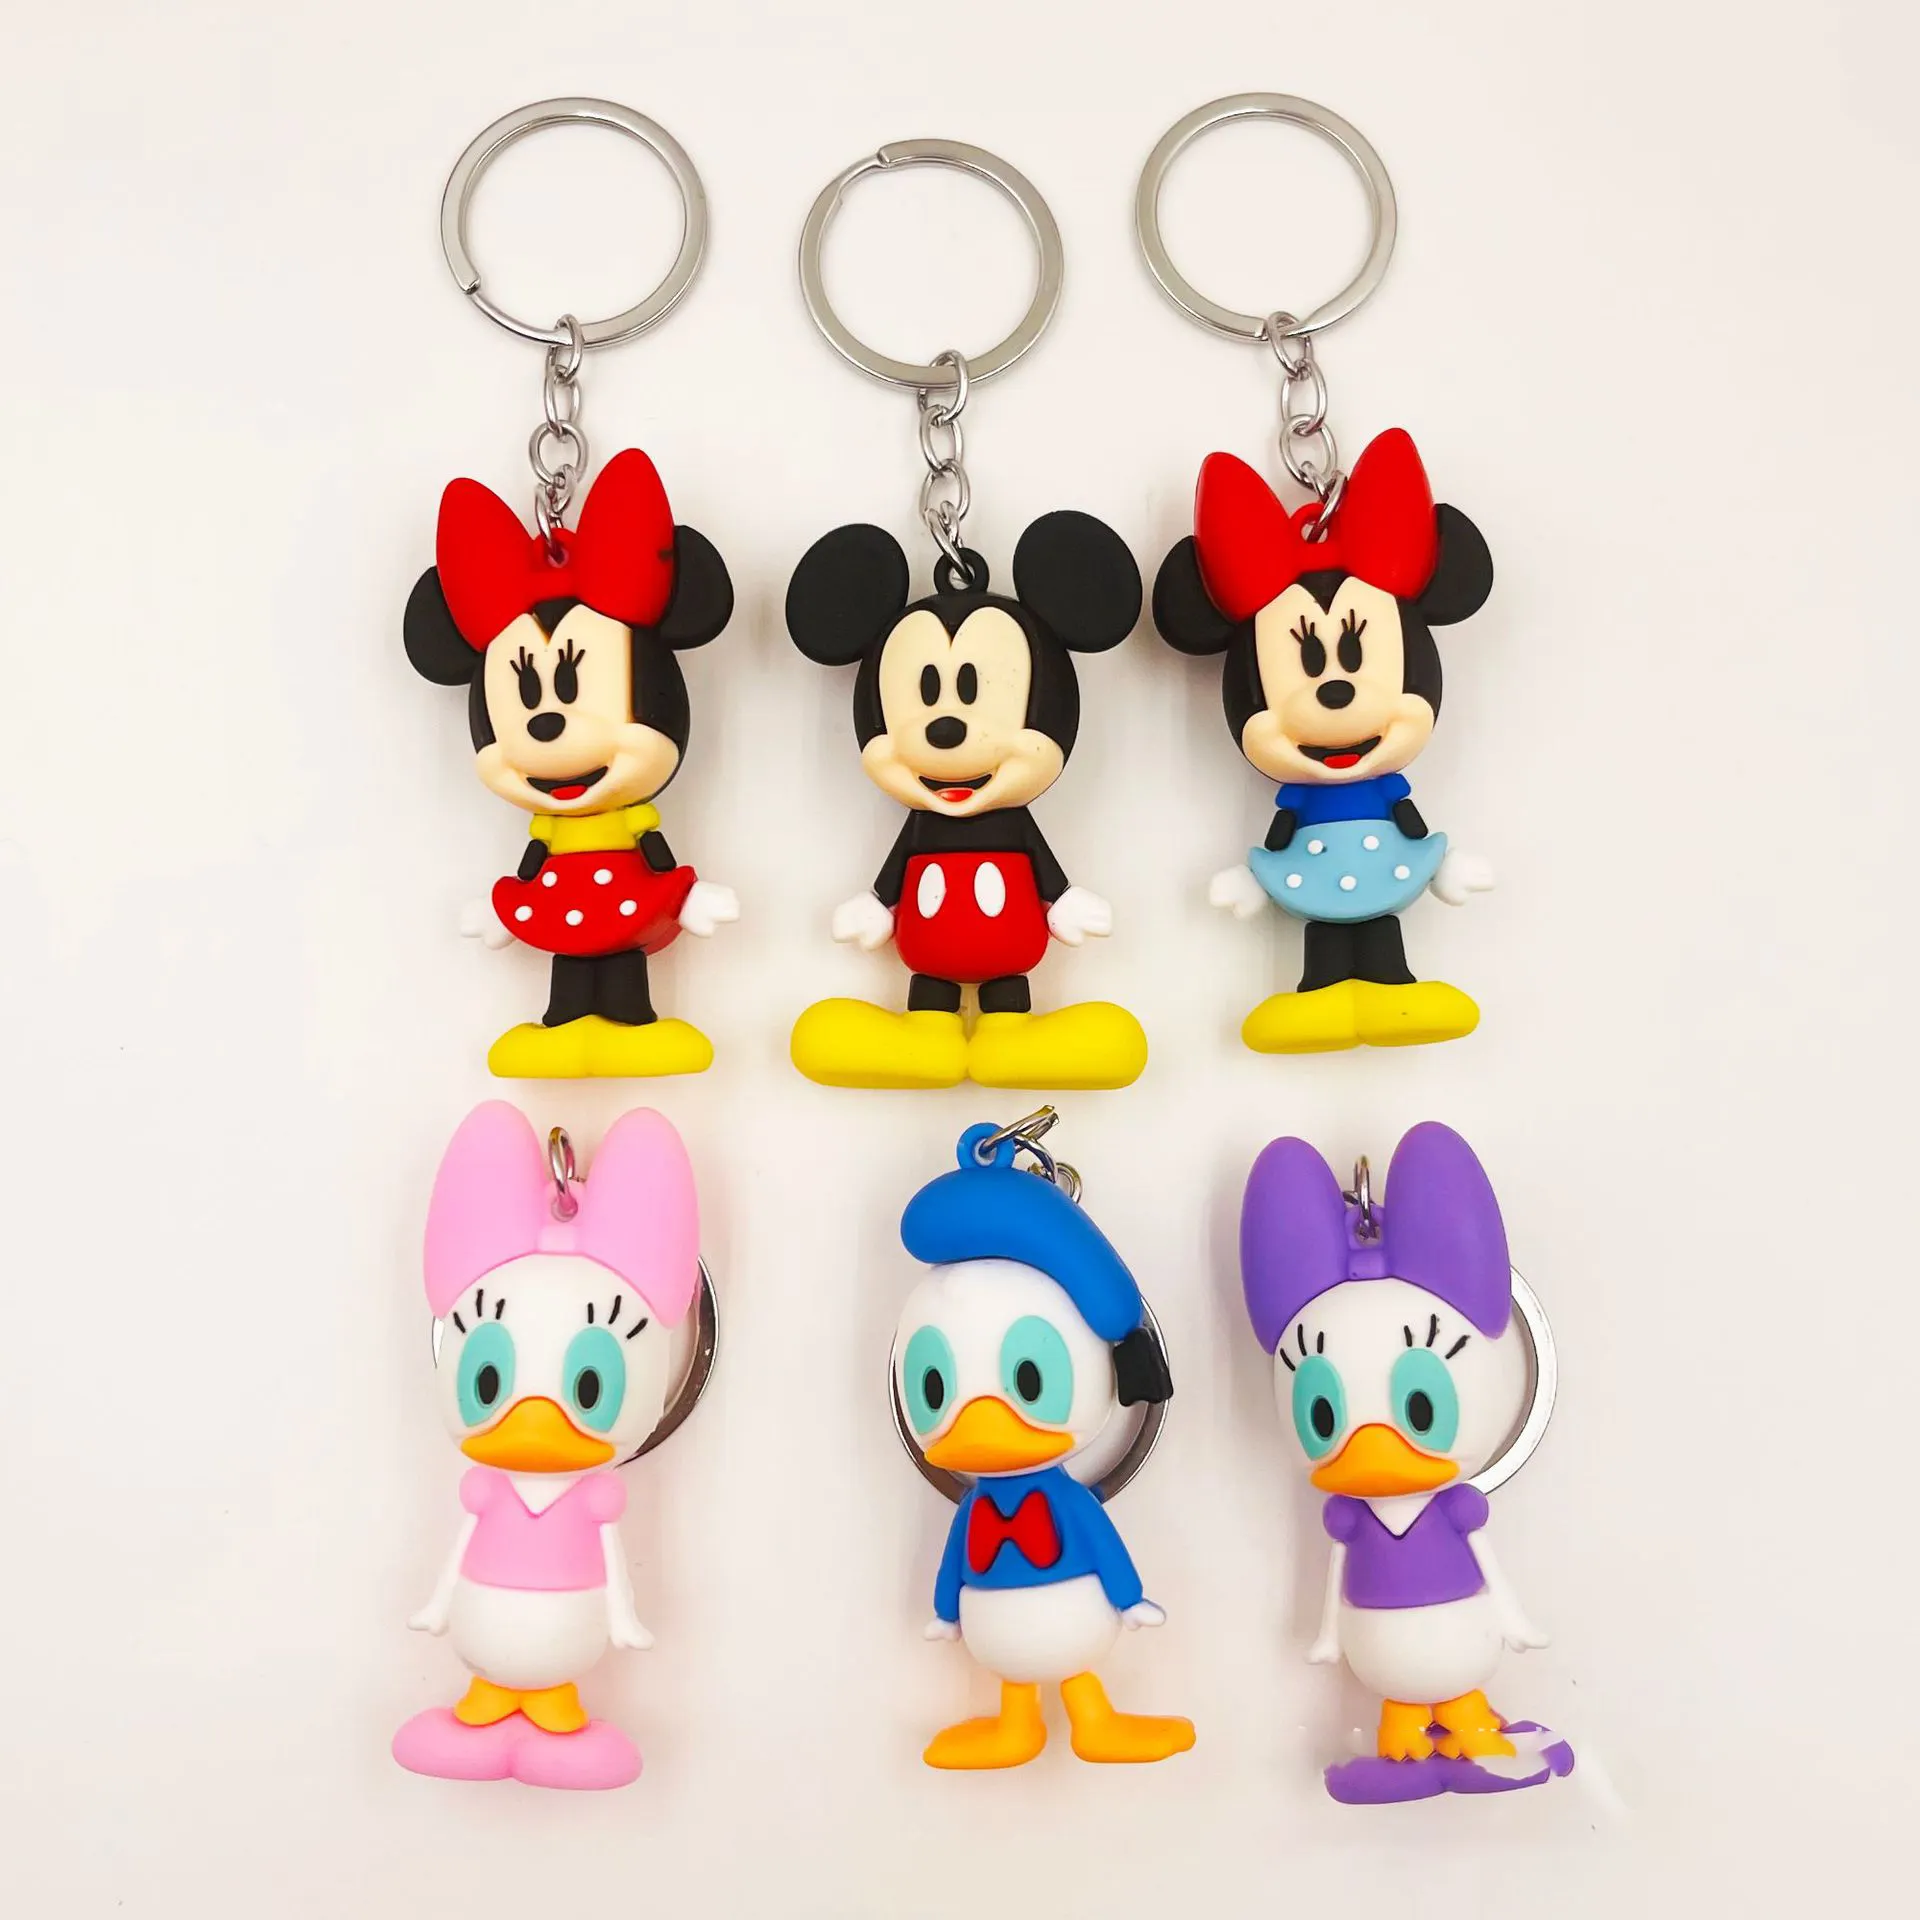 3D Cartoon Mic Key Design PVC Rubber Bag Charm Key Chain Gift Wrist Strap Custom Rubber Keychain